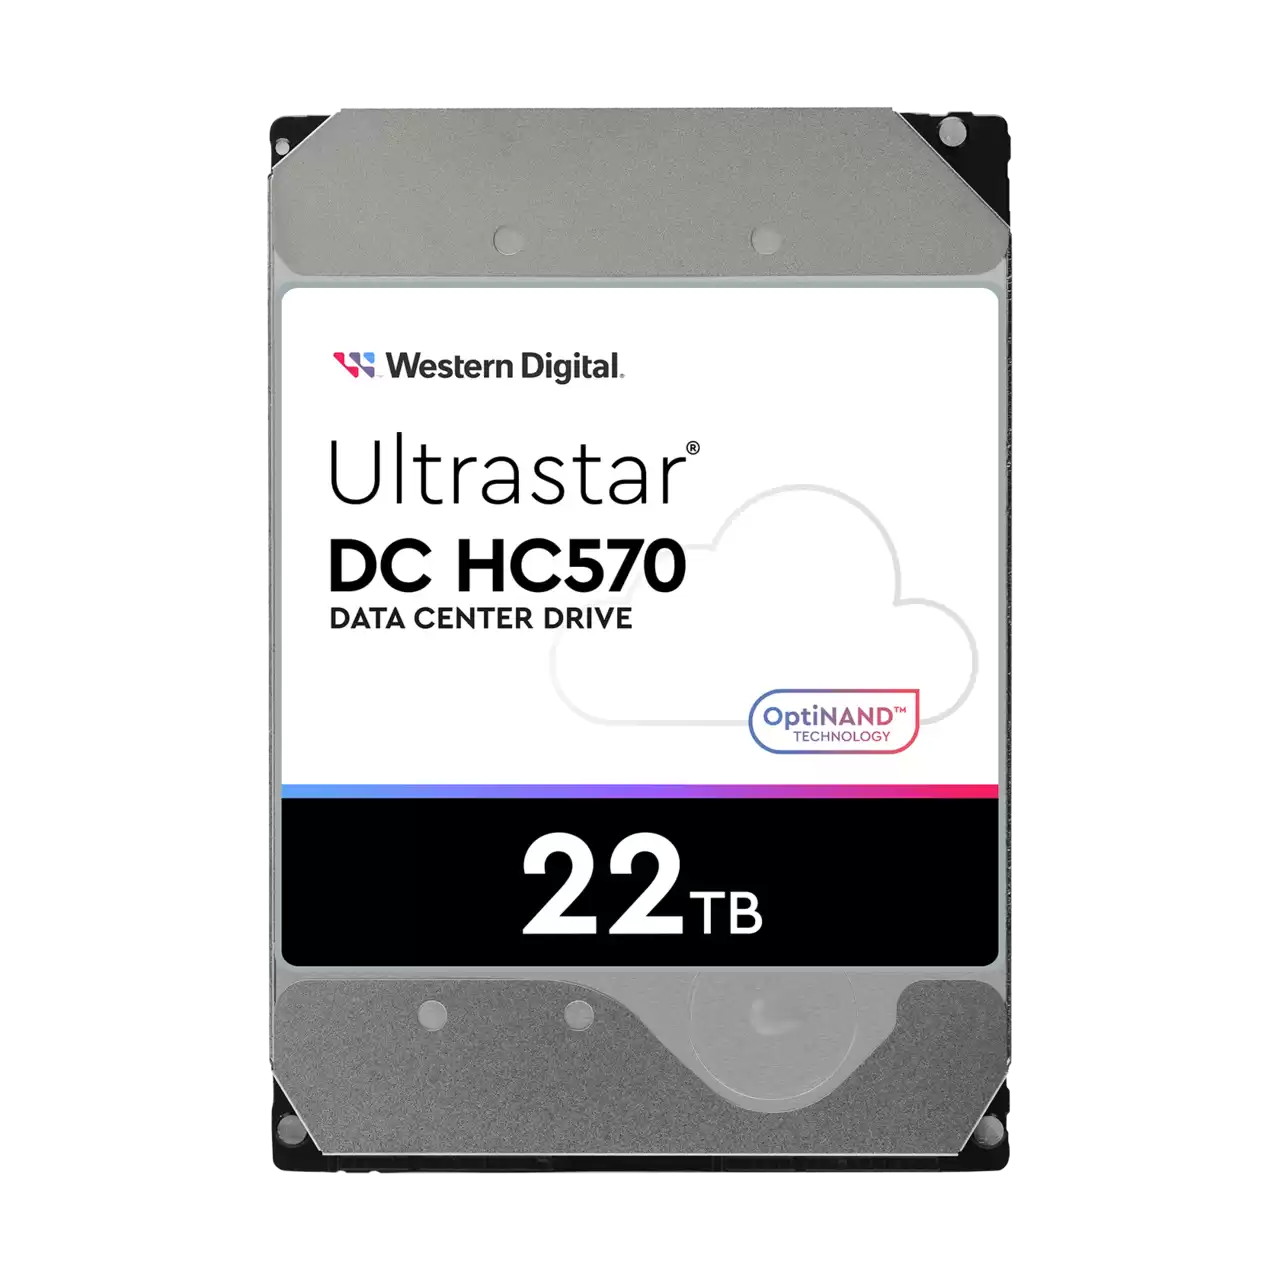 Хард диск WD Ultrastar DC HC570, 22TB, 7200RPM, SATA 6GB/s - WUH722222ALE6L4-1